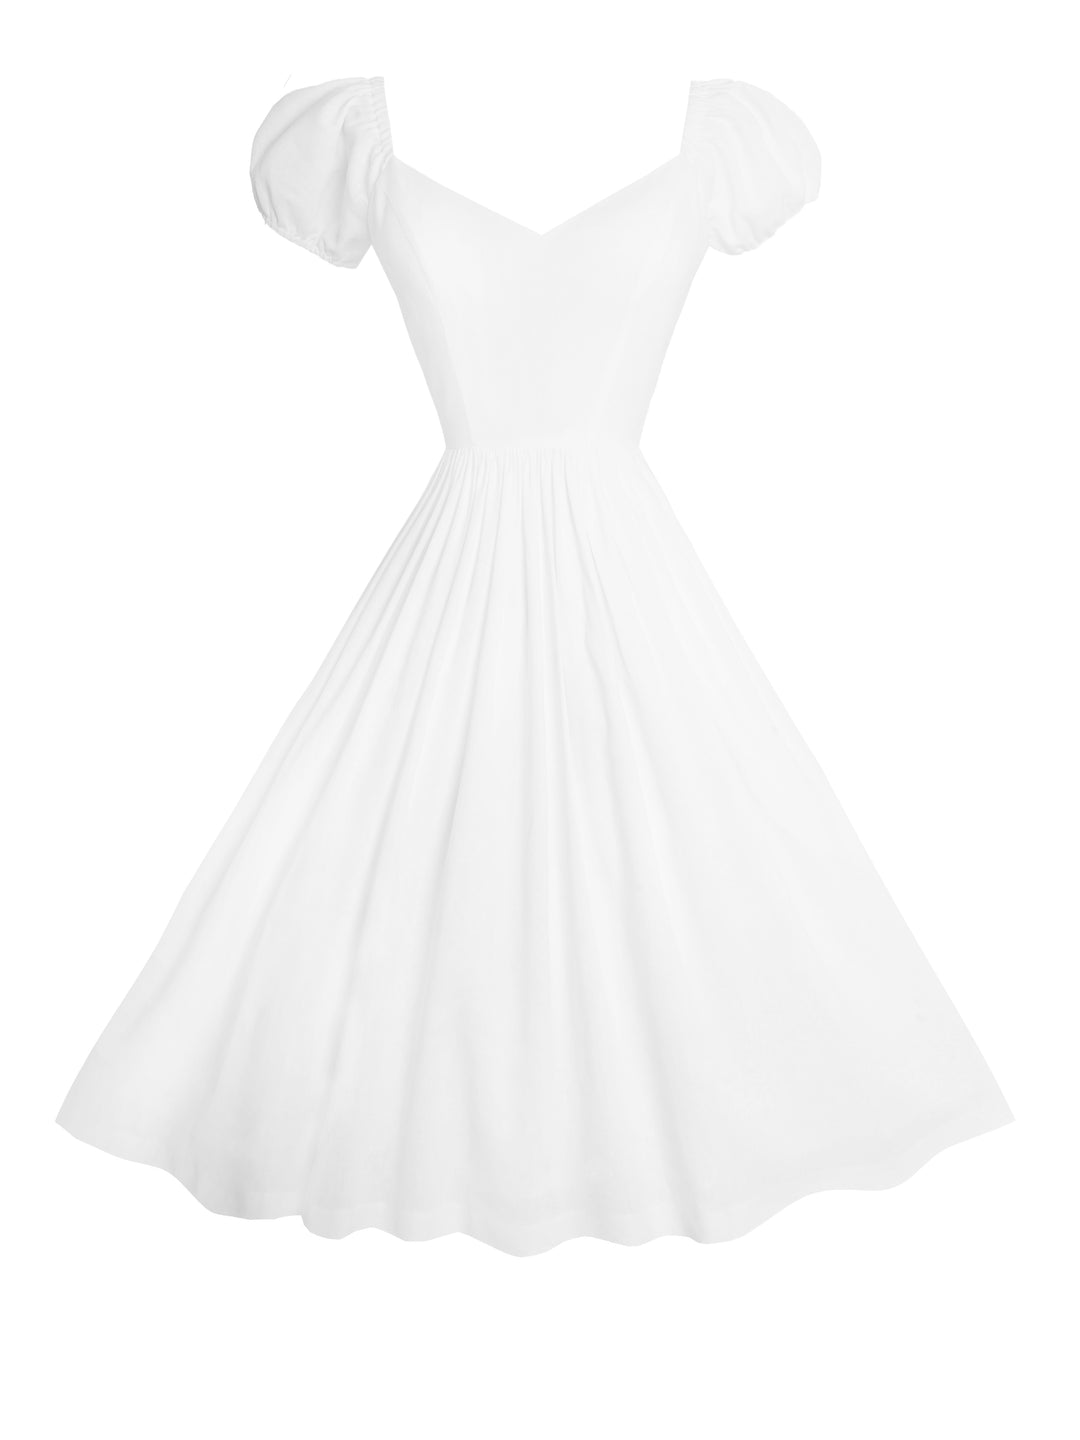 MTO - Margaret Dress in White Cotton